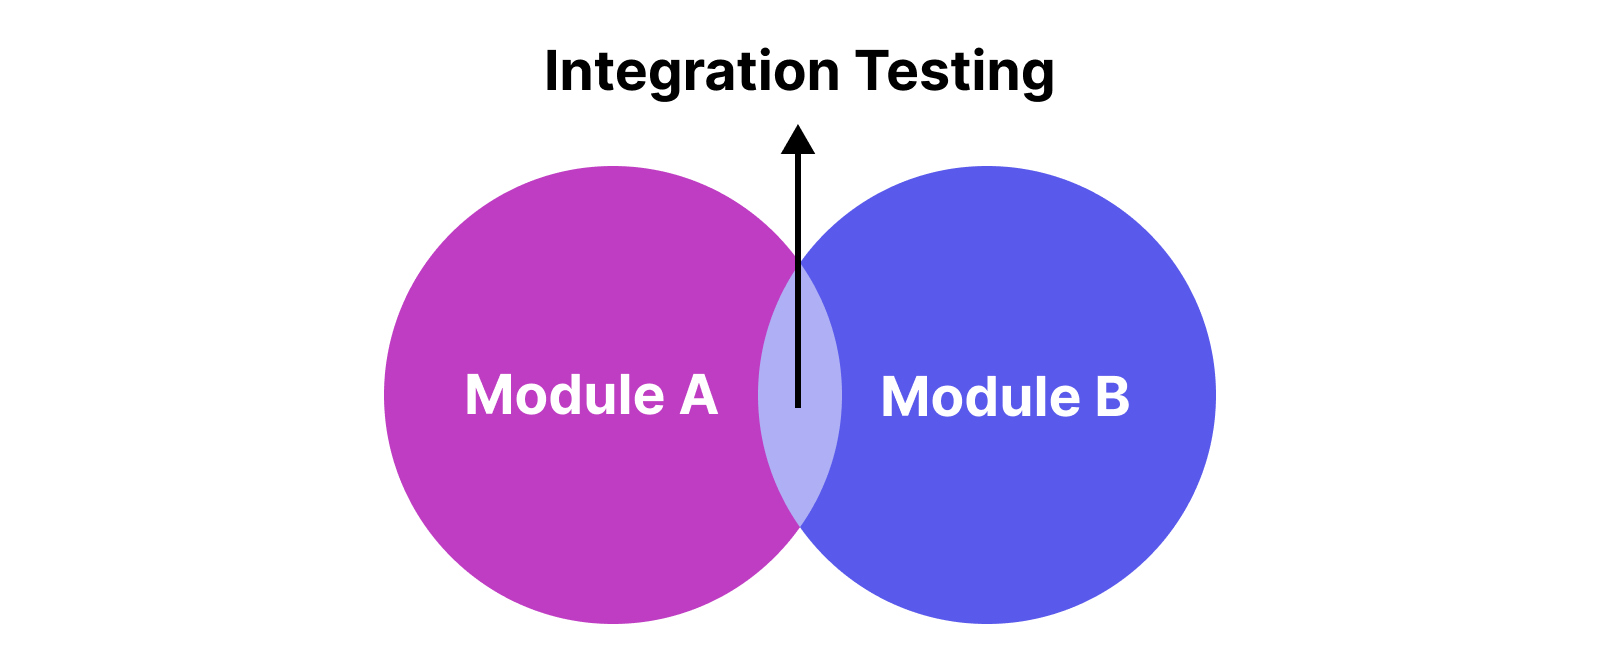 Definition of integration testing